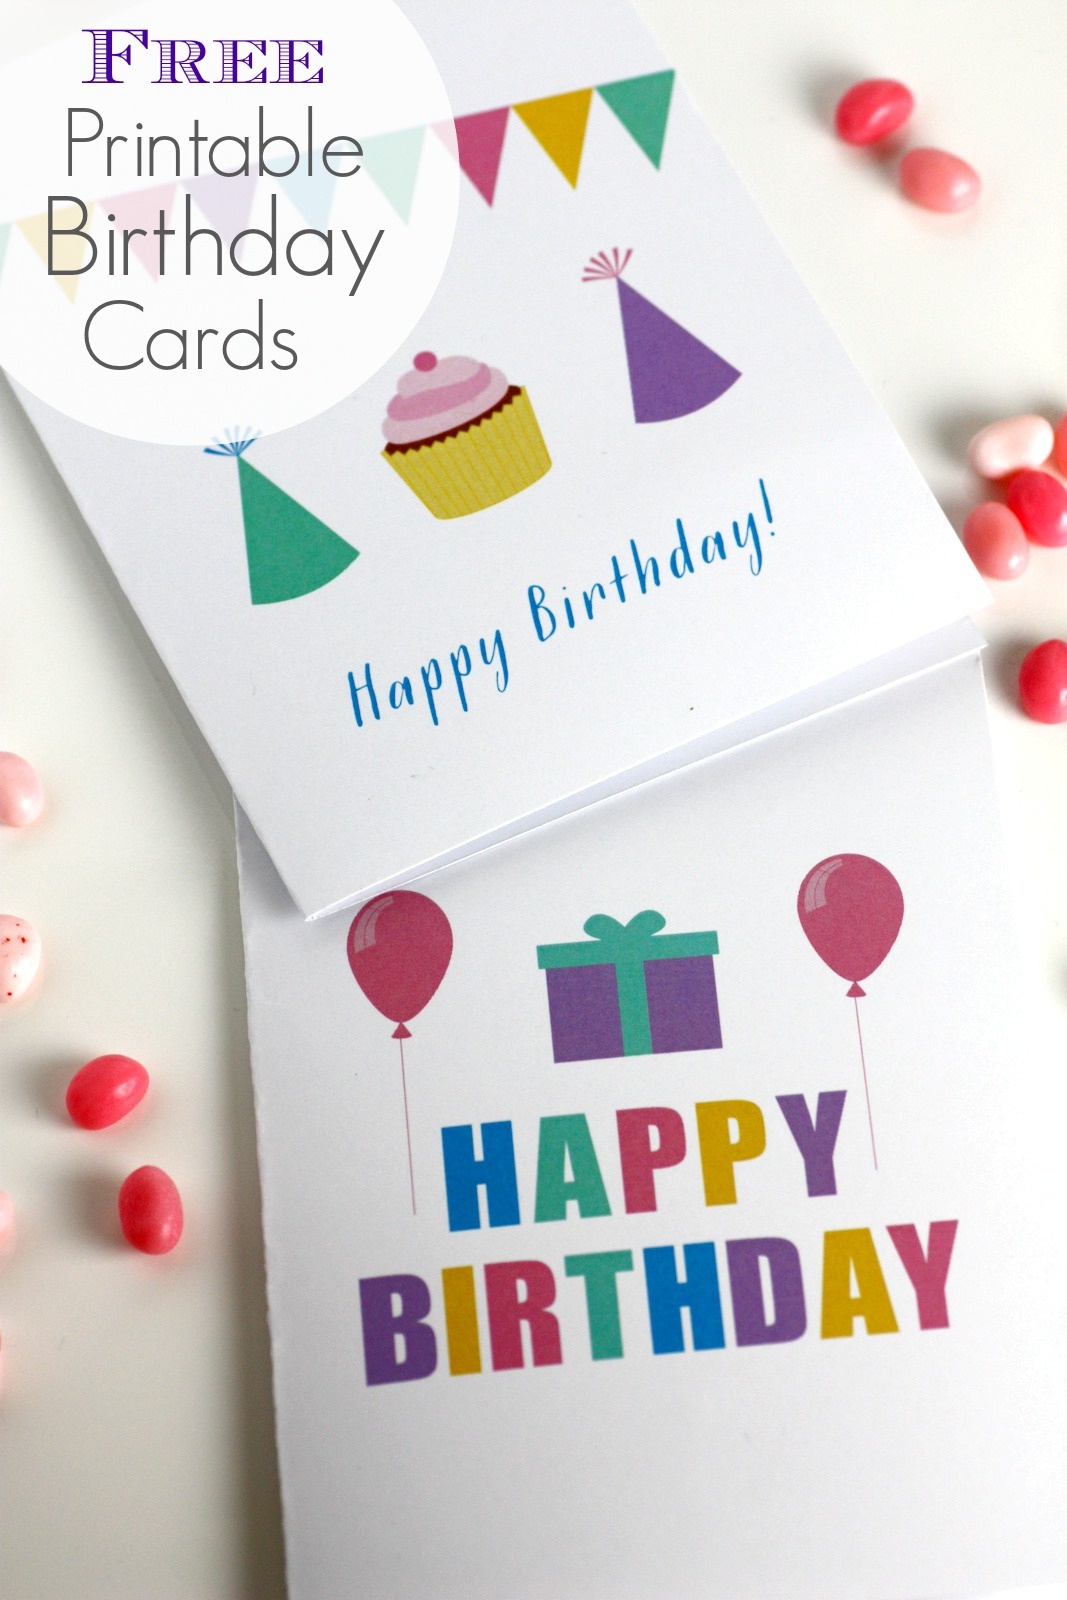 Free Printable Blank Birthday Cards | Catch My Party - Free Printable Birthday Cards For Adults